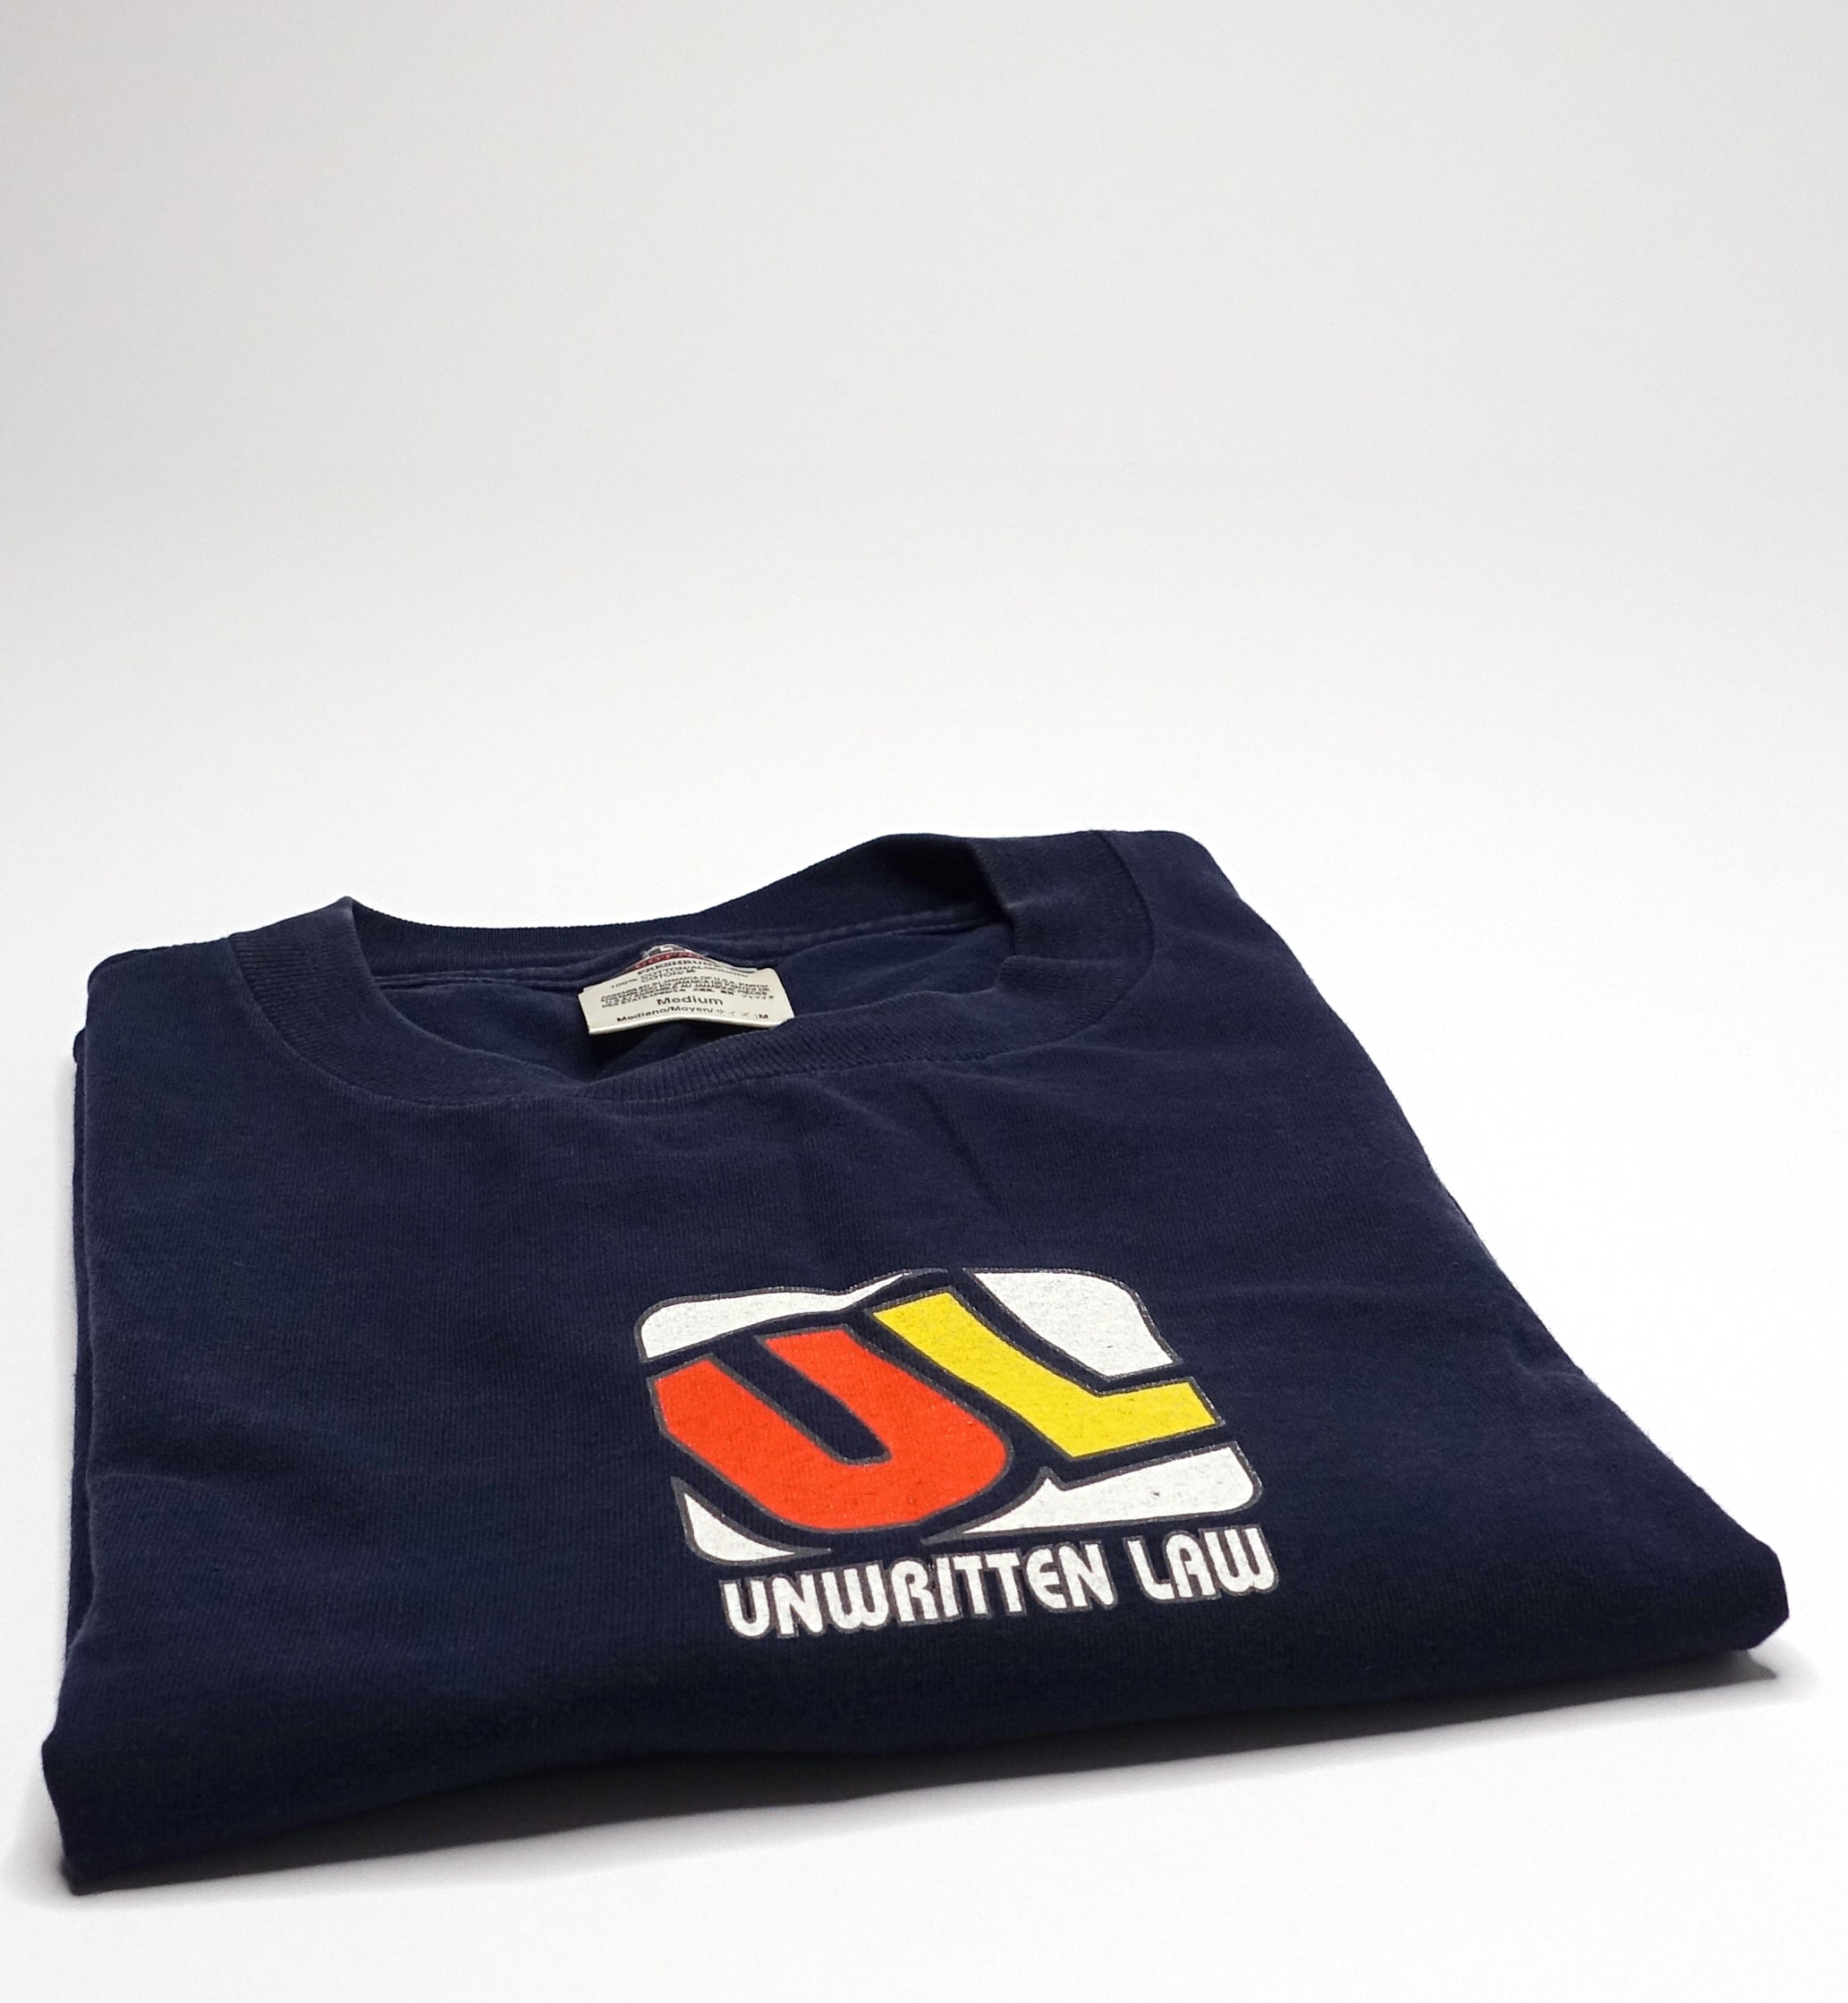 Unwritten Law – UL 1999 Tour Shirt Size Medium